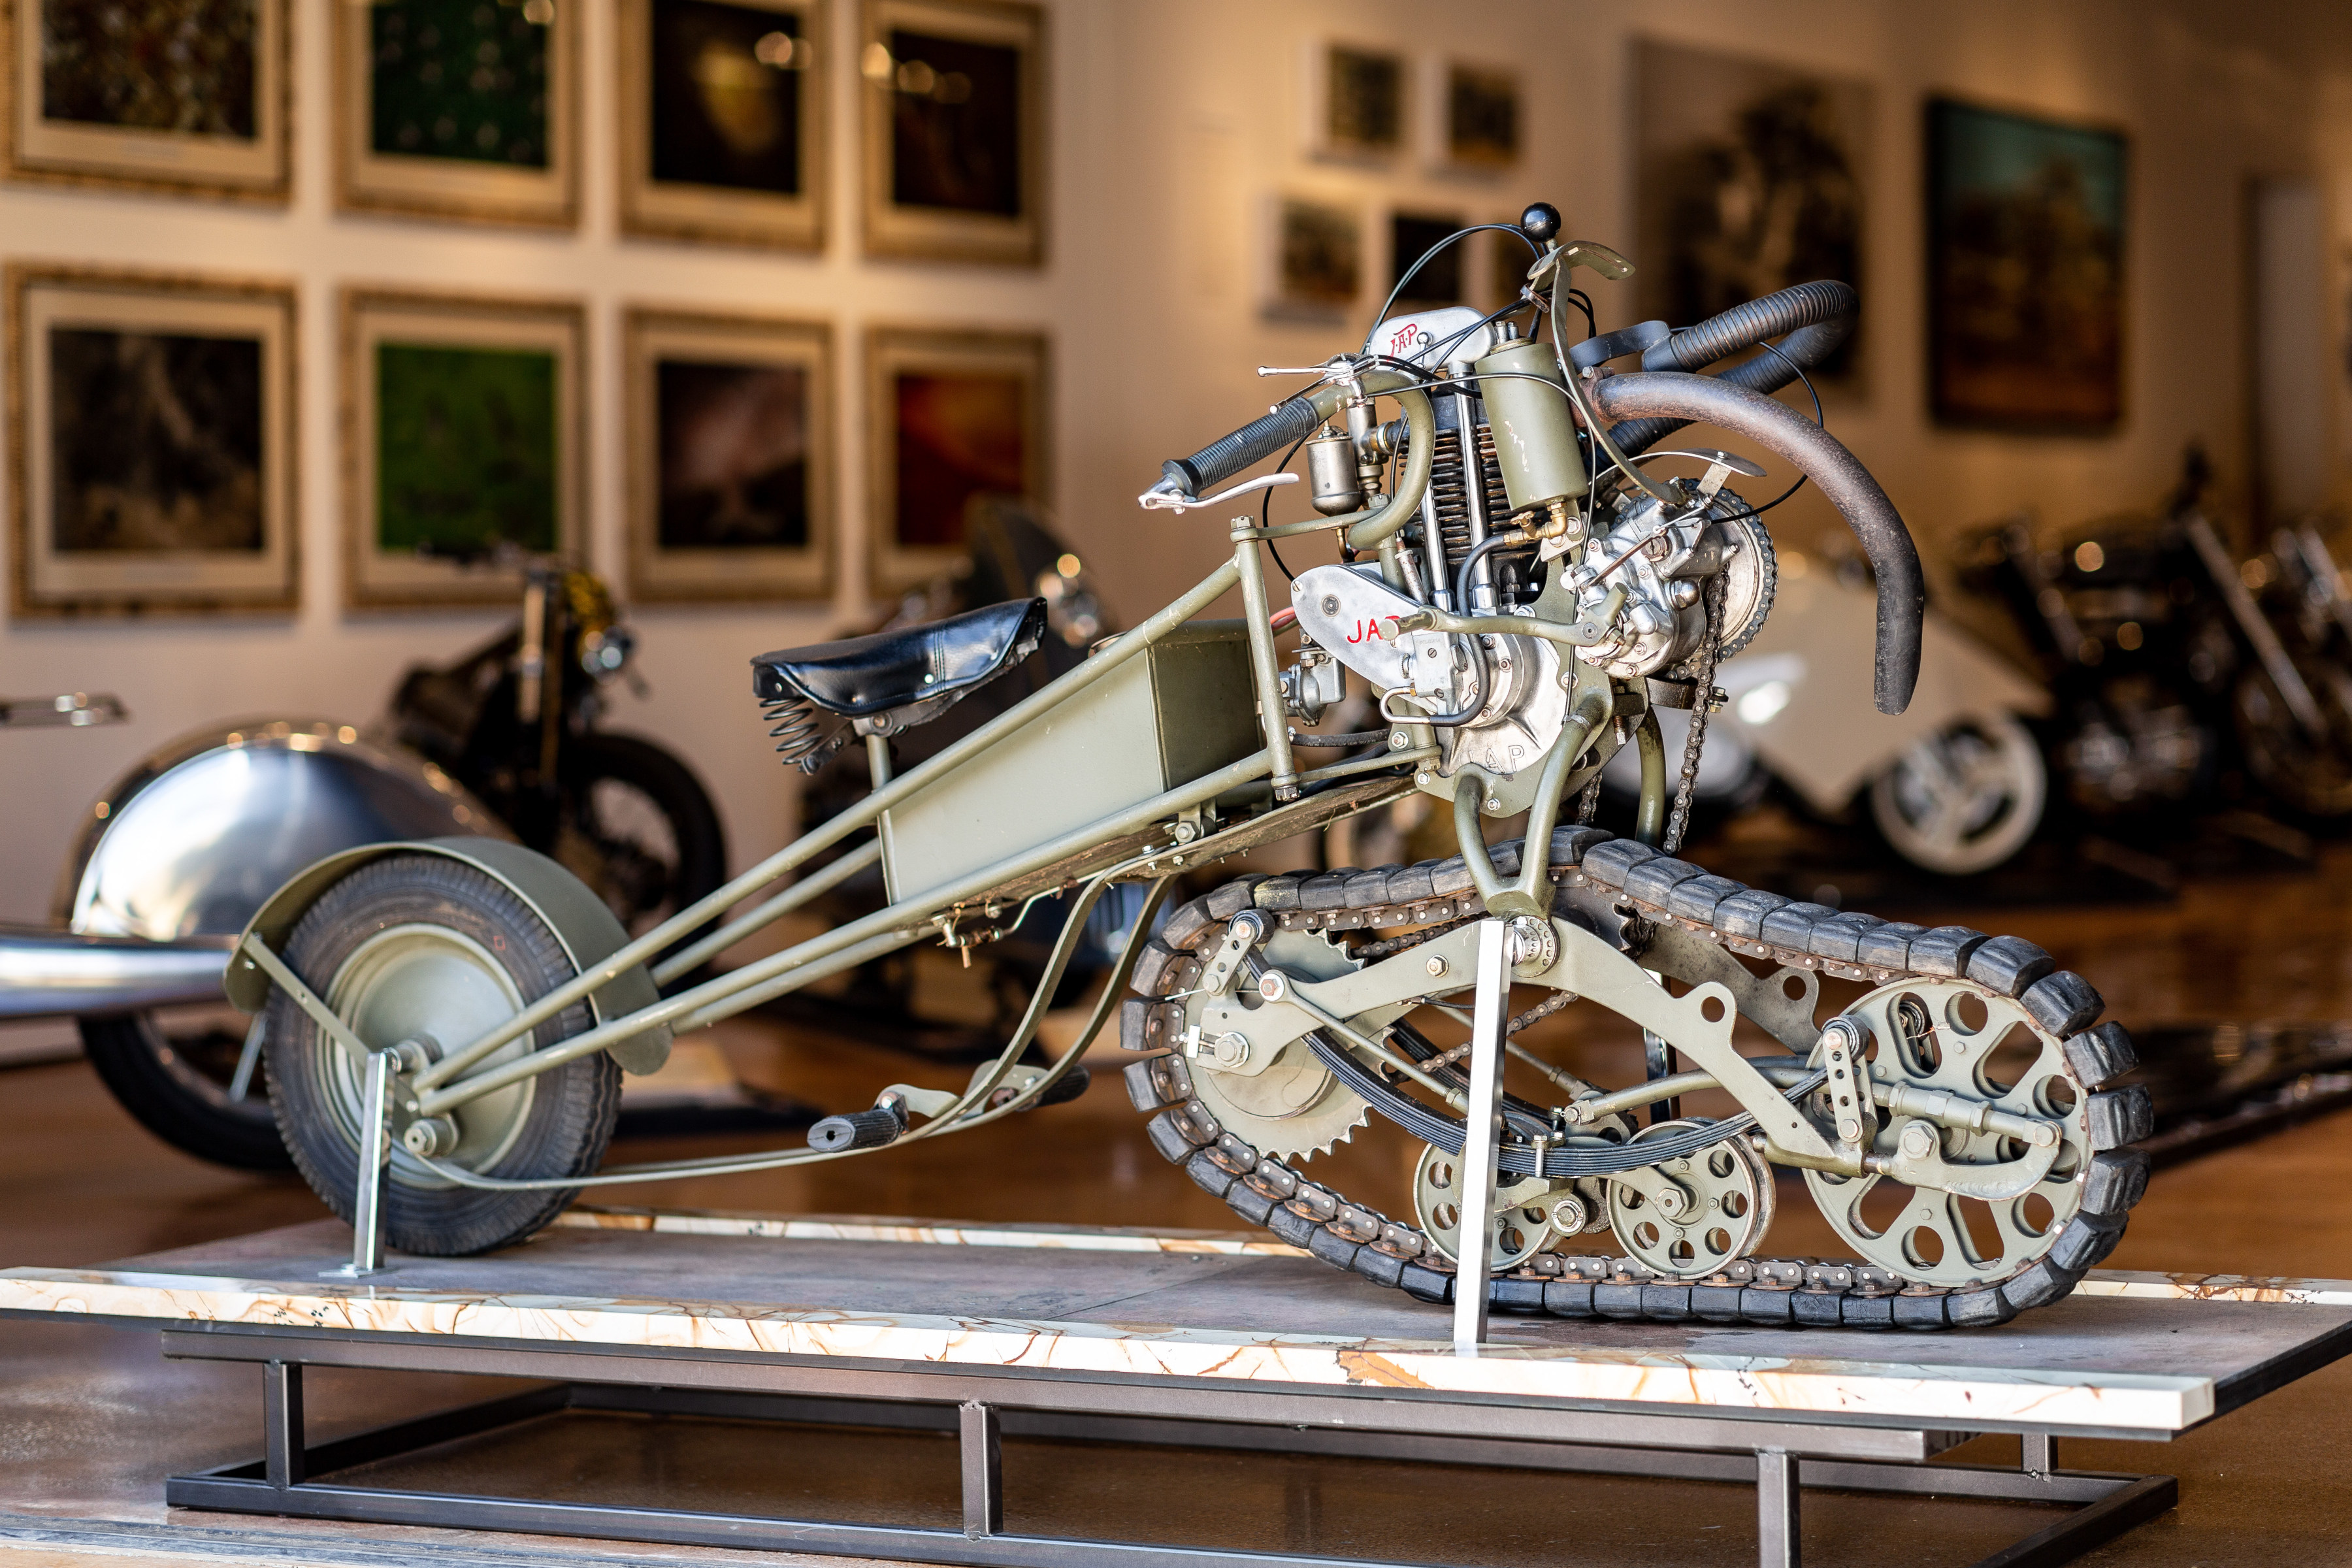 1937 Mercier Moto Chenille -  - Viewing Room - Haas Moto Museum Blog